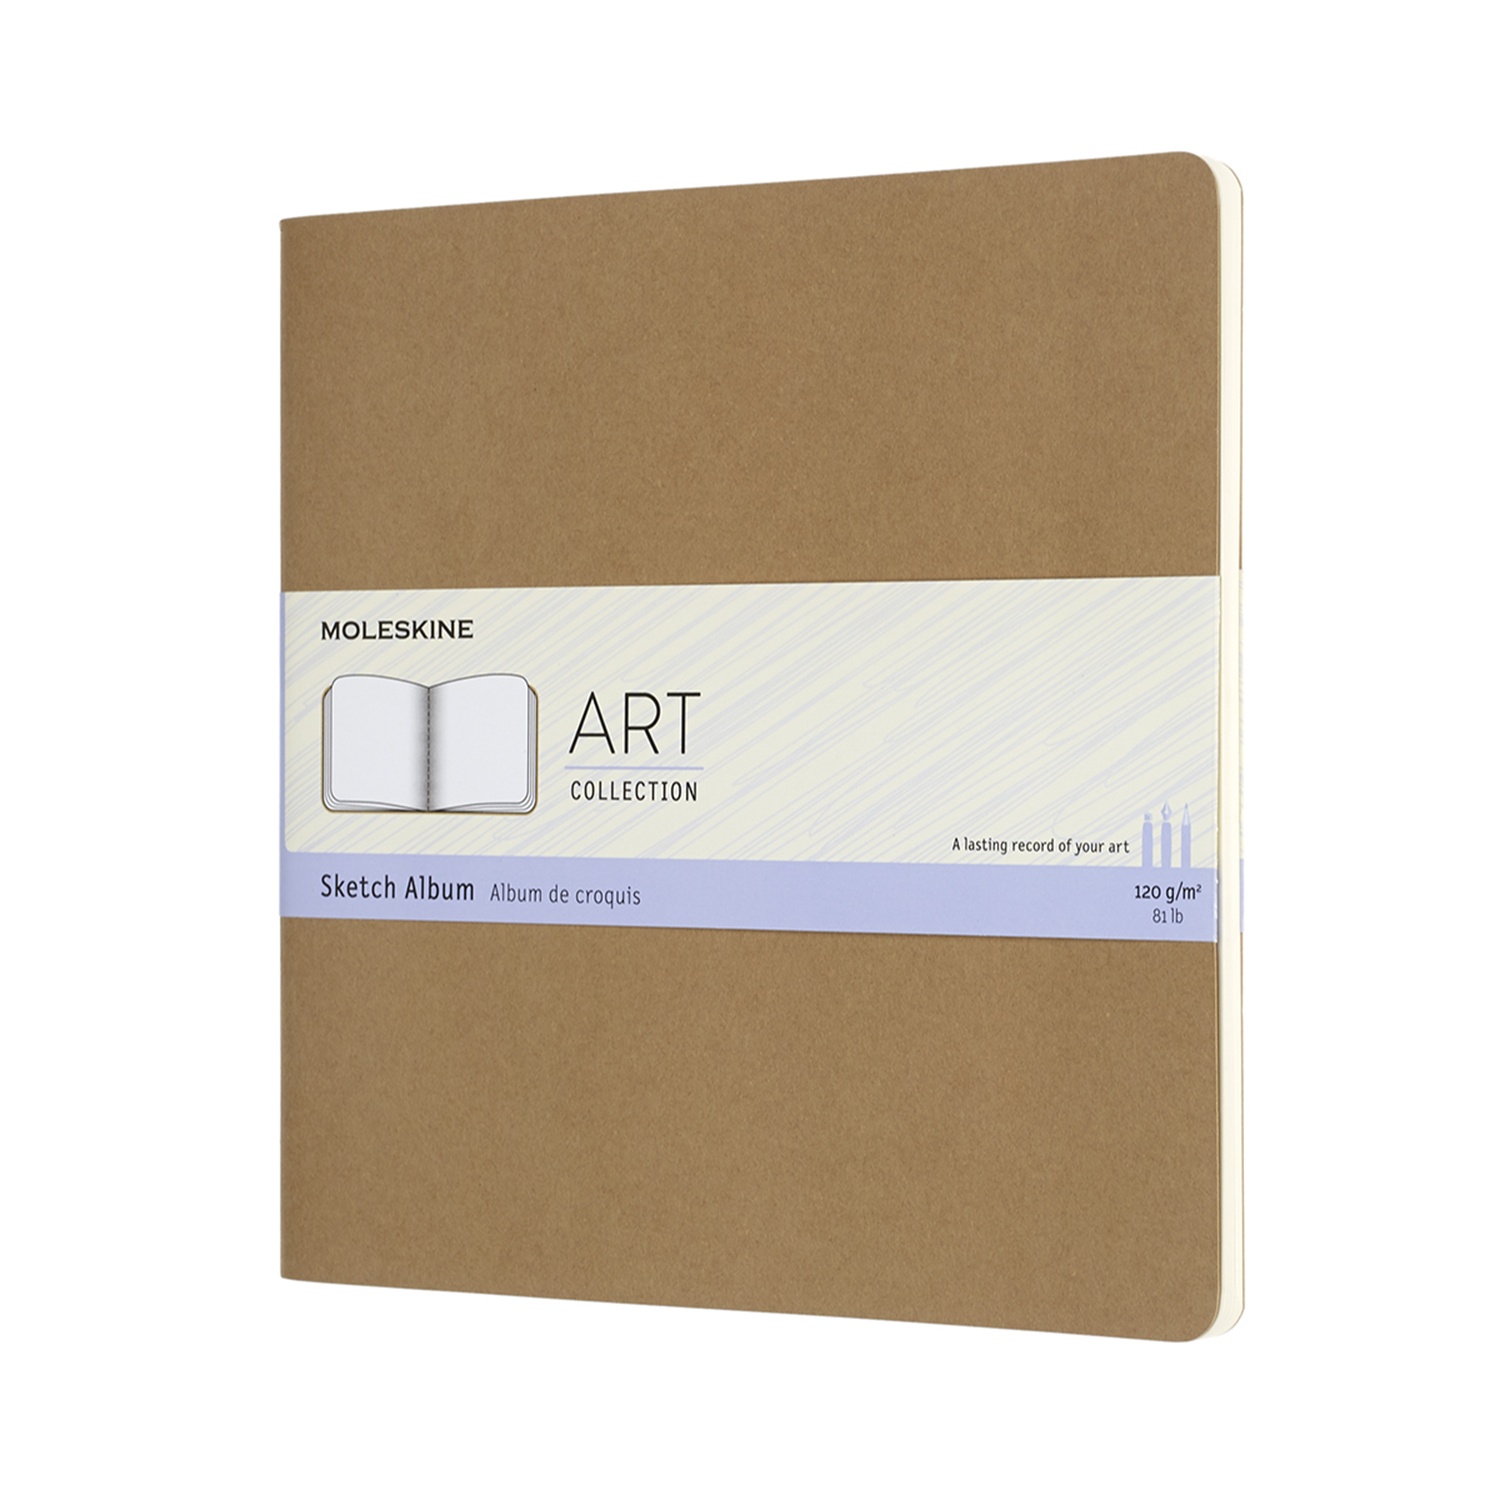 Скетчбук для рисования ART CAHIER SKETCH 120г/кв.м 190х190мм 44л. бежевый по 1 979.00 руб от Moleskine